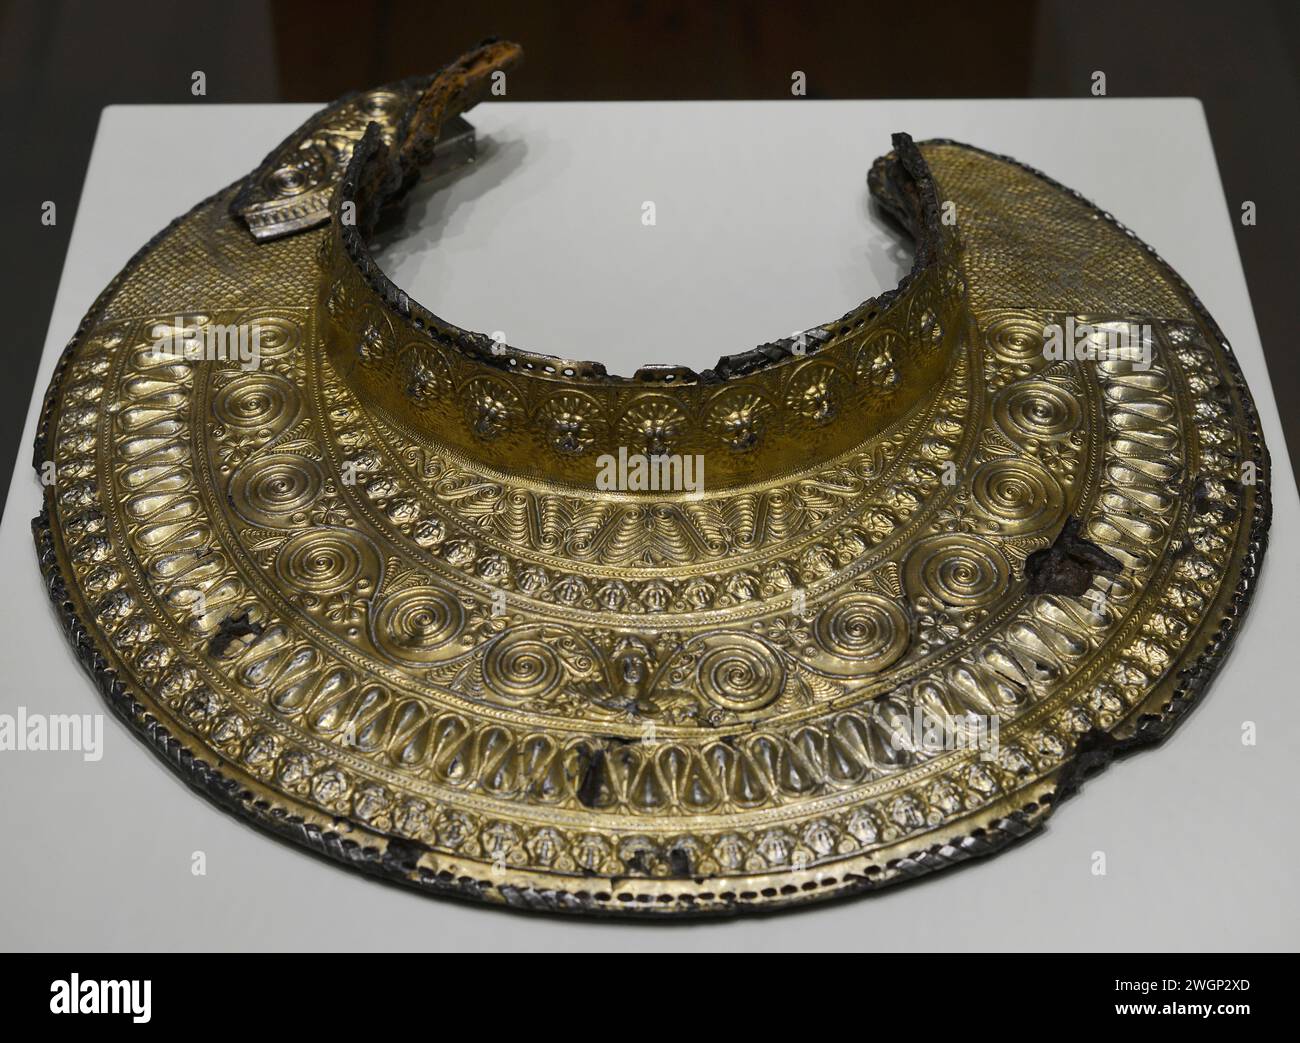 Pectoral. Iron and gold. Late 4th century BC. From Mezek Tumulus, Haskovo region, Bulgaria. National Archaeological Museum. Sofia. Bulgaria. Stock Photo